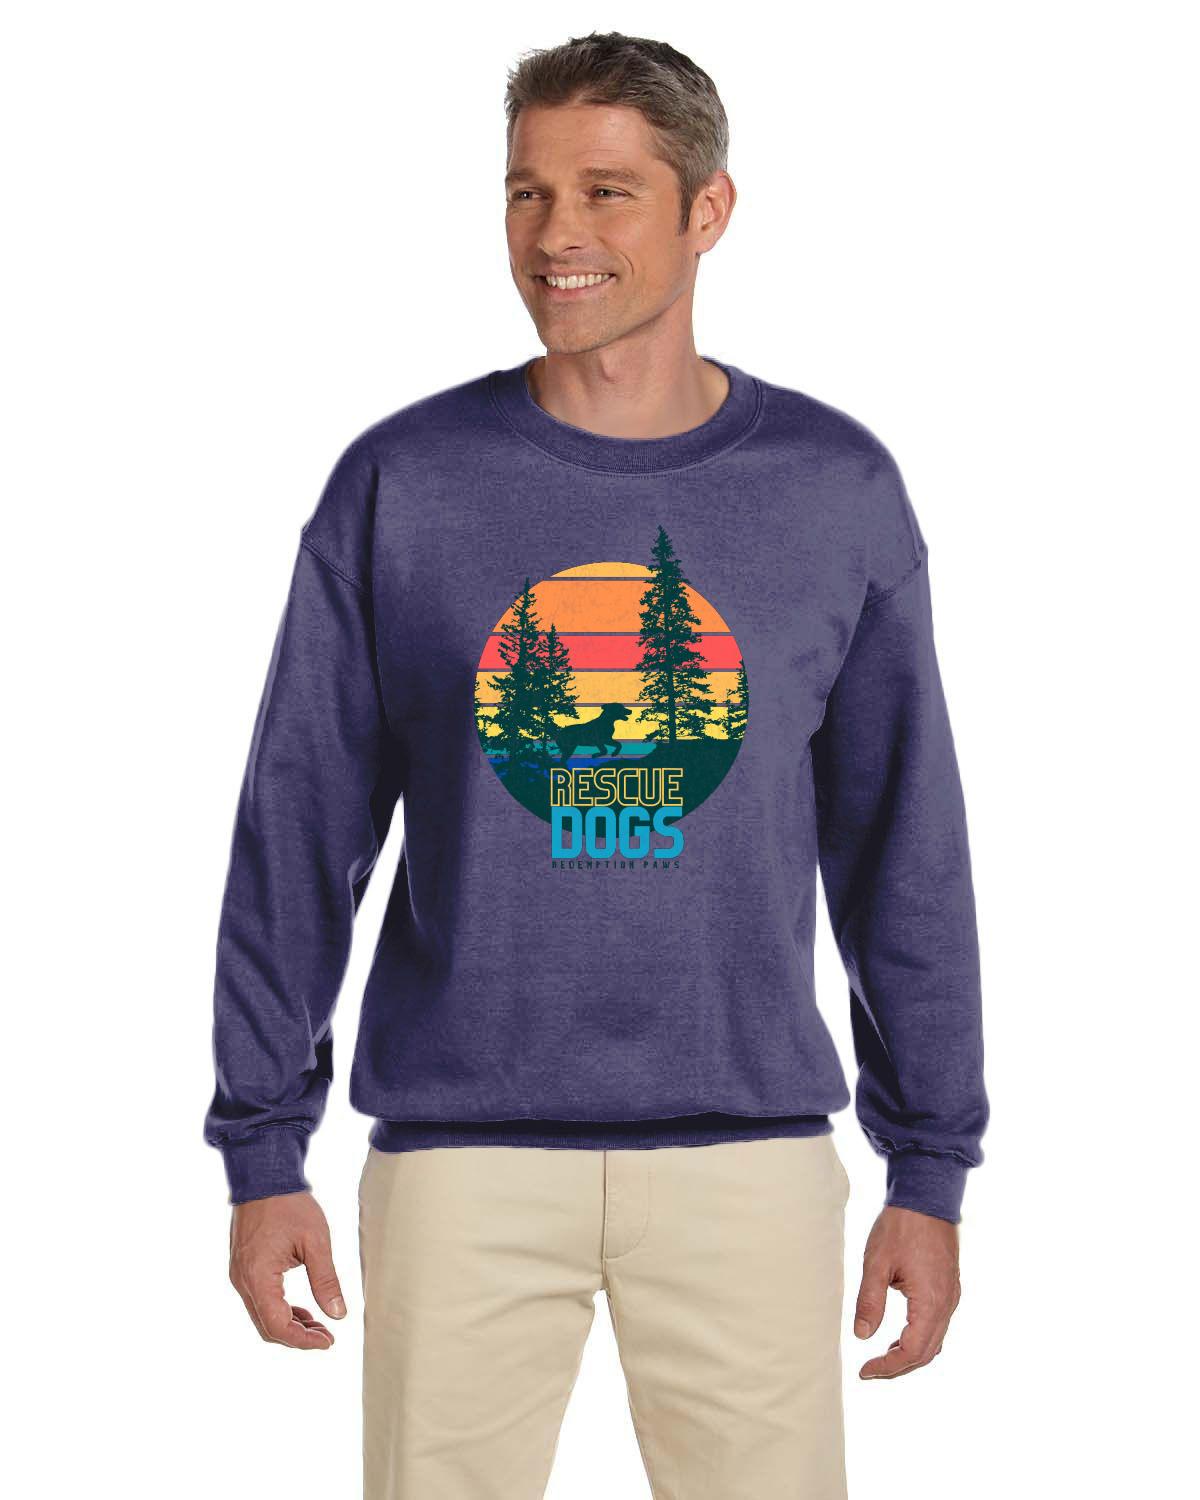 Sunset Rescue Dogs Sweatshirt